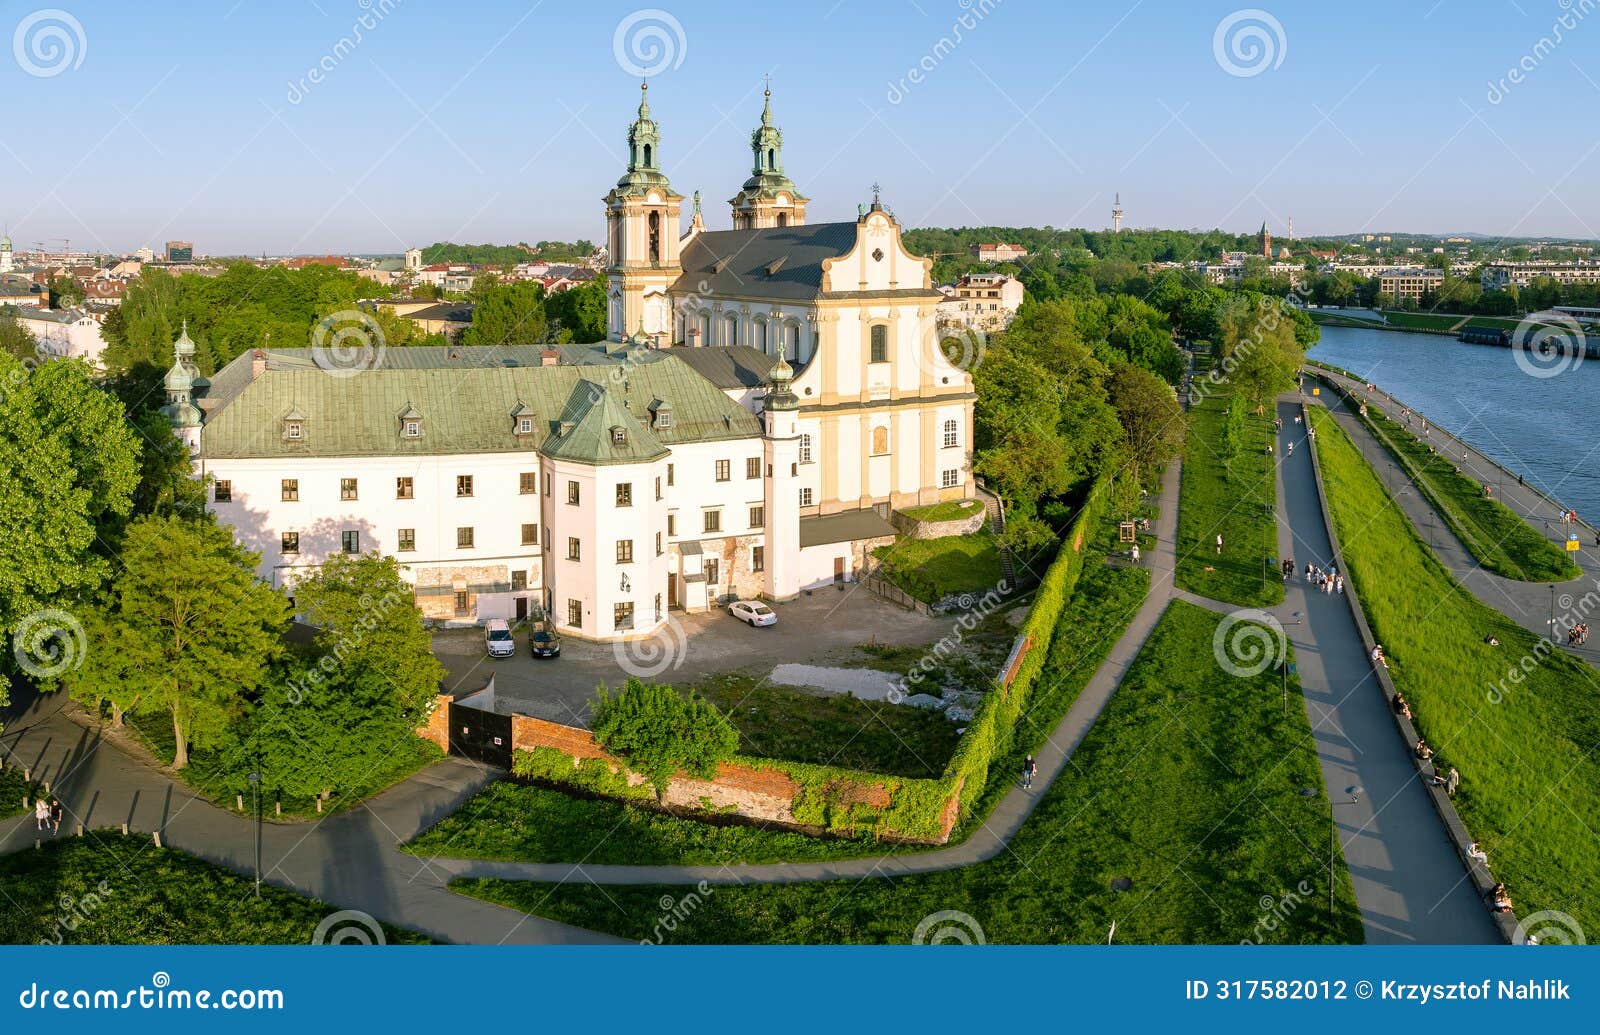 skalka church, monastery and vistula river in krakow, poland